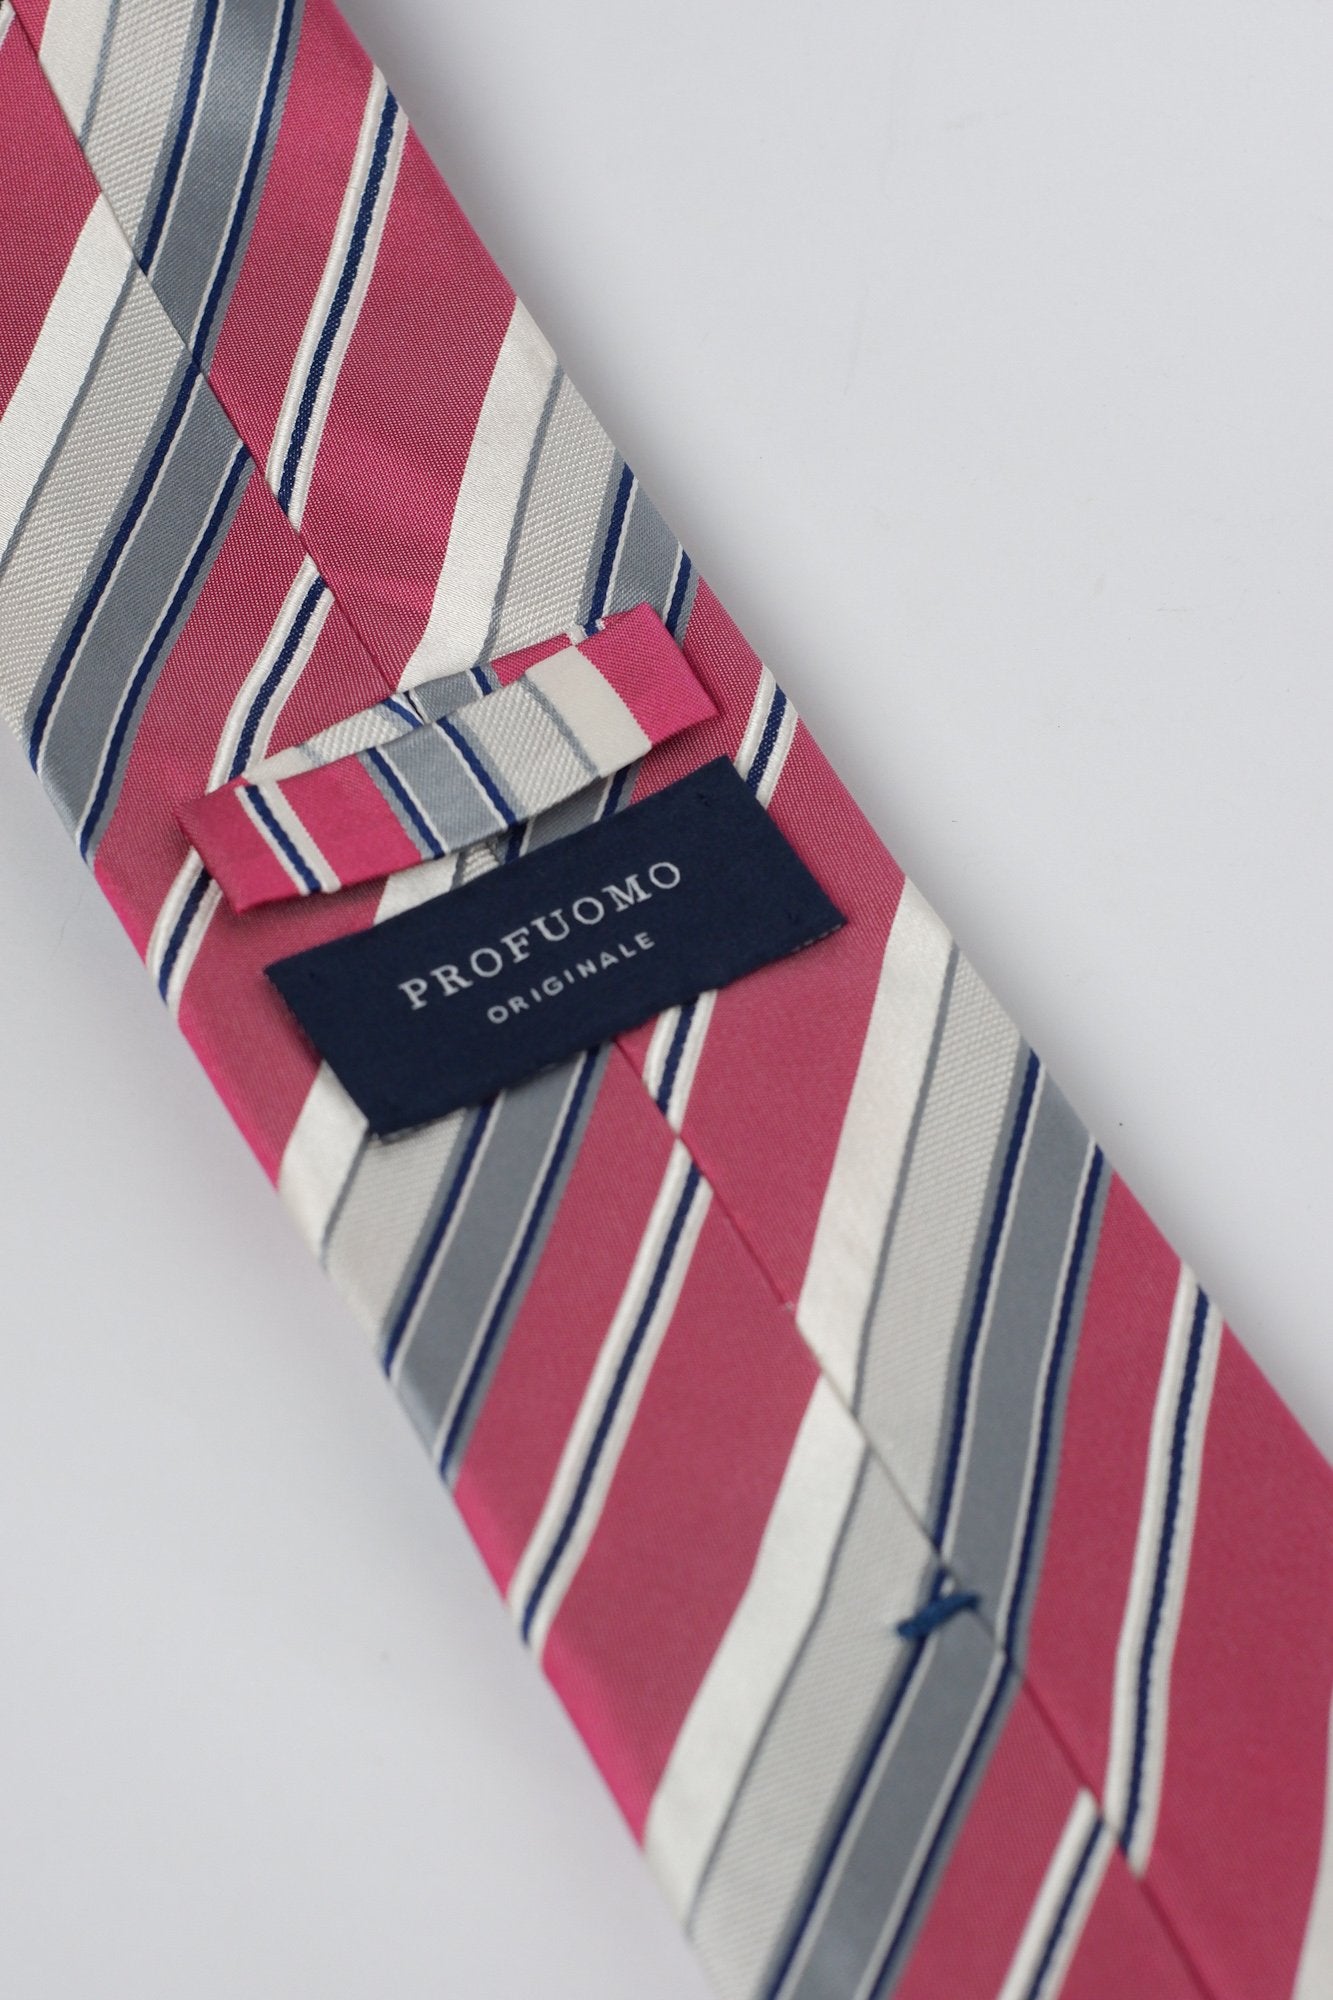 Profumo Pink and Grey Stripes Necktie